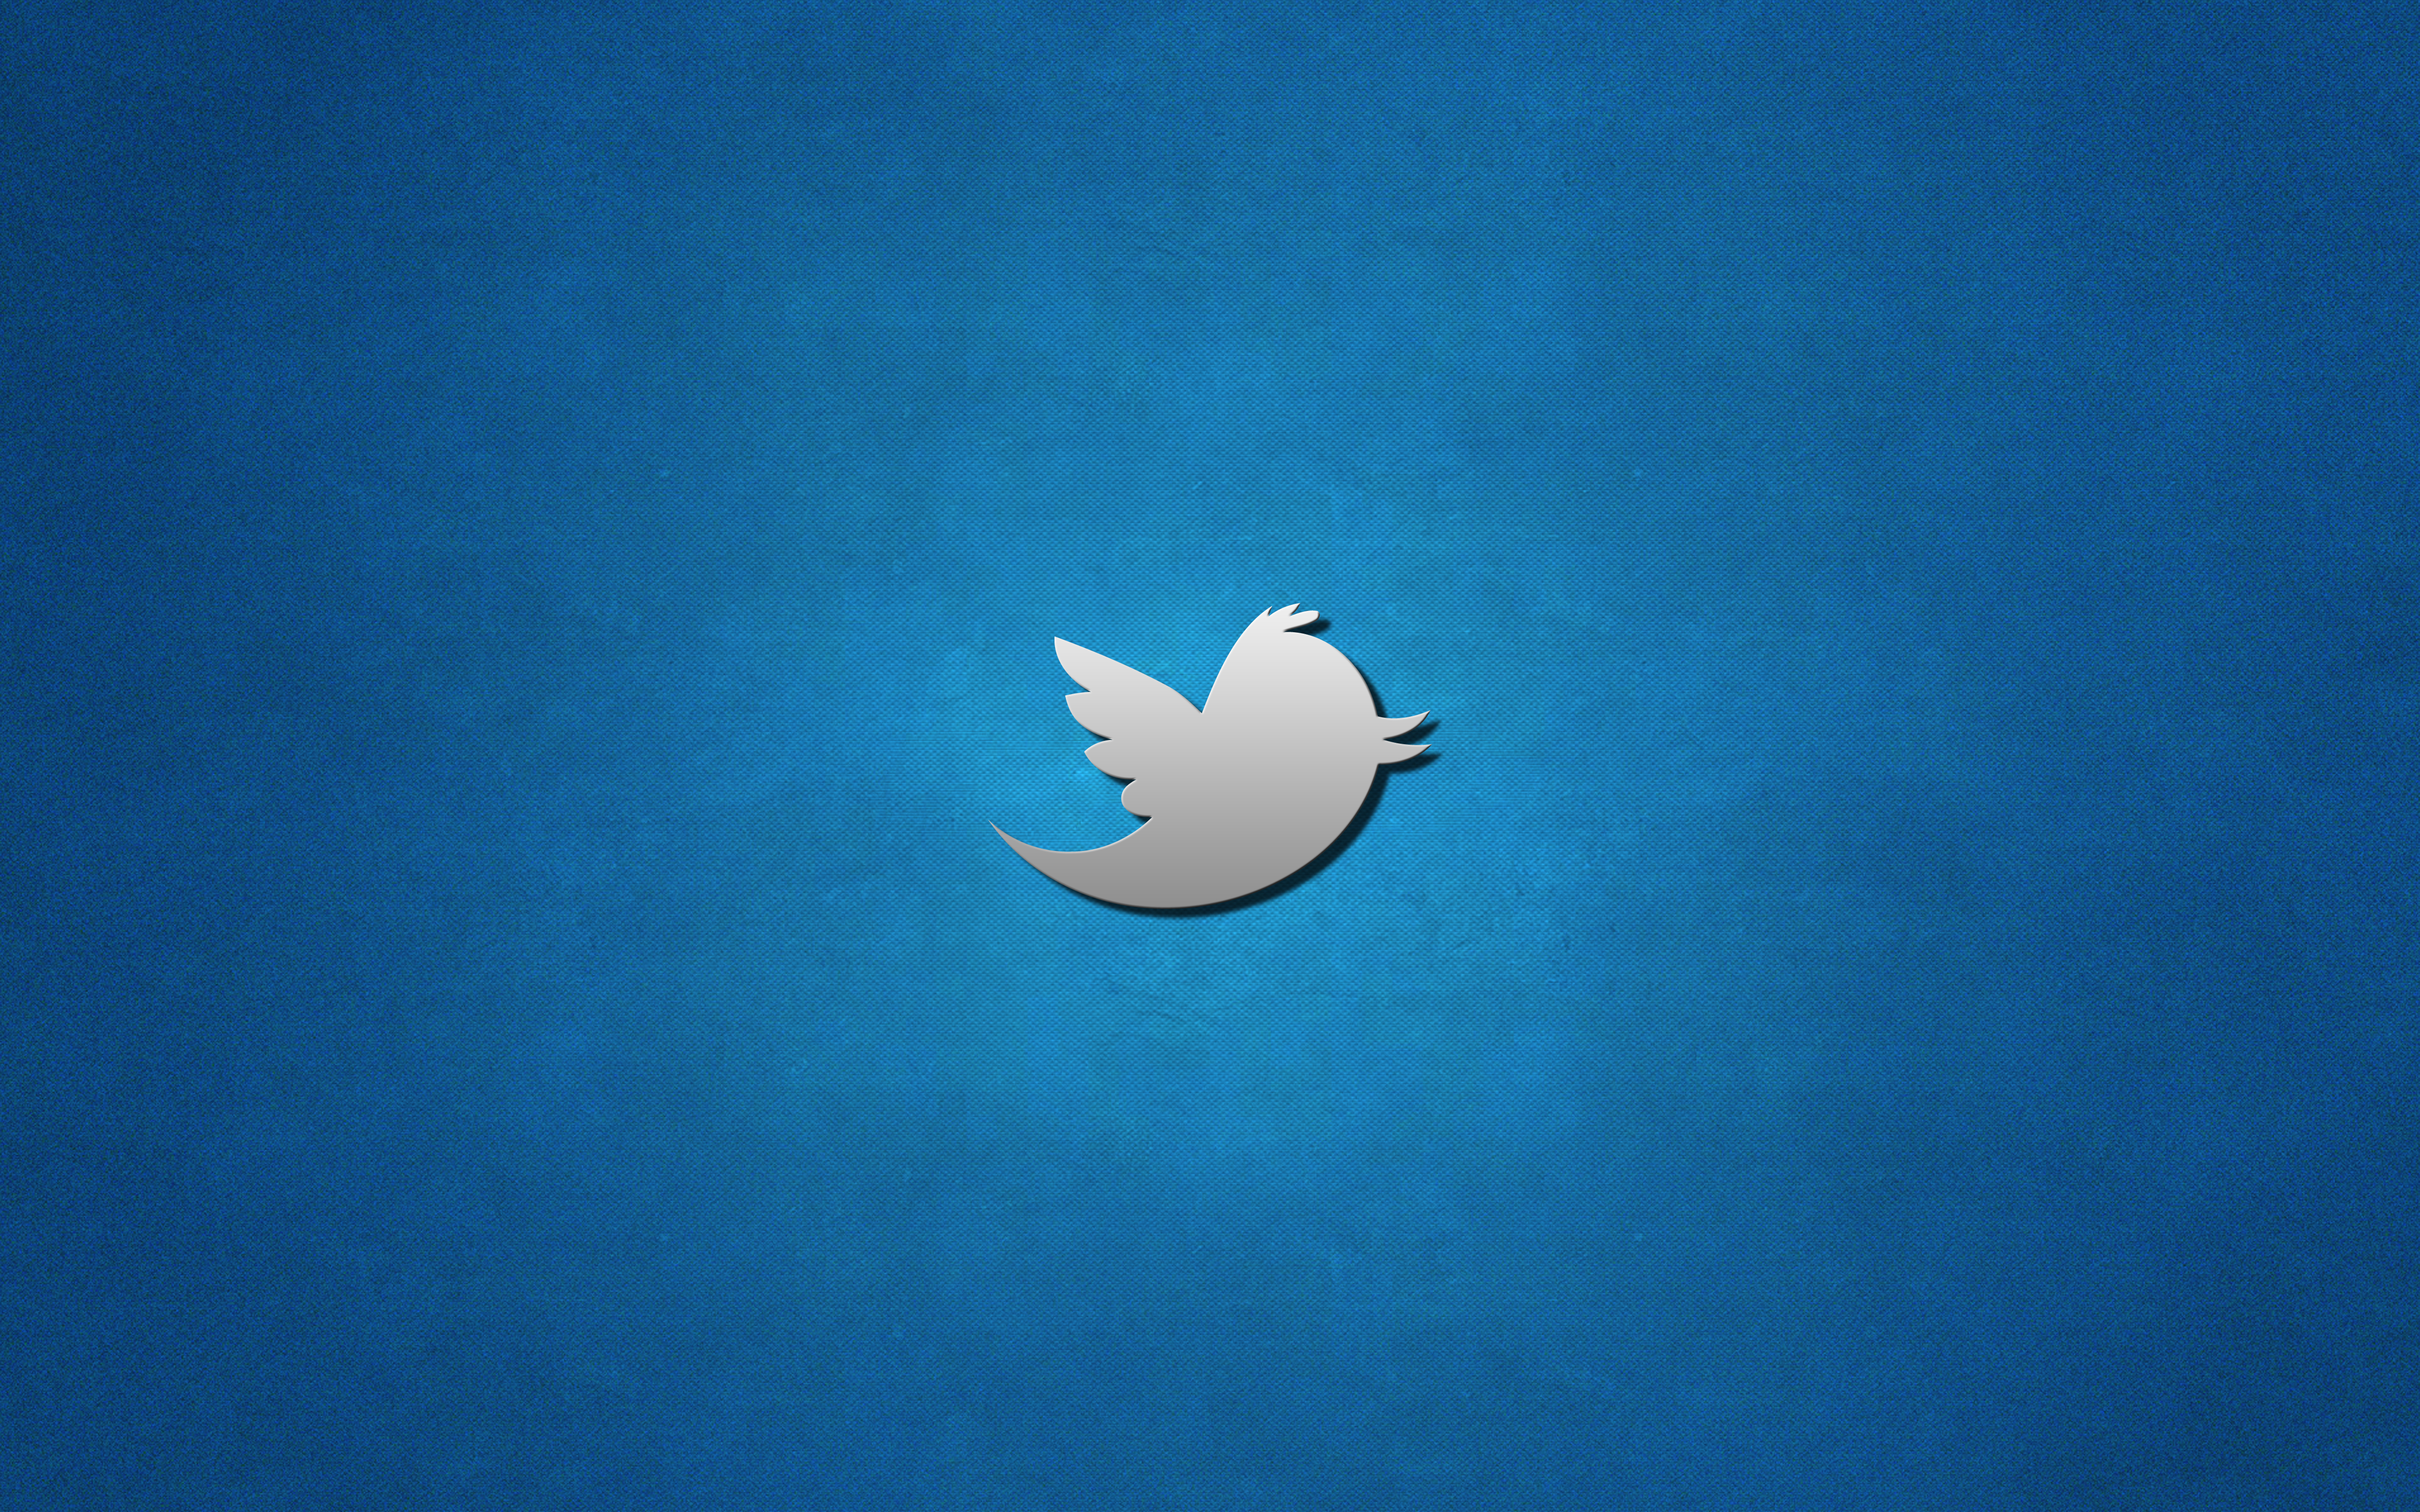 Technology Twitter HD Wallpaper | Background Image